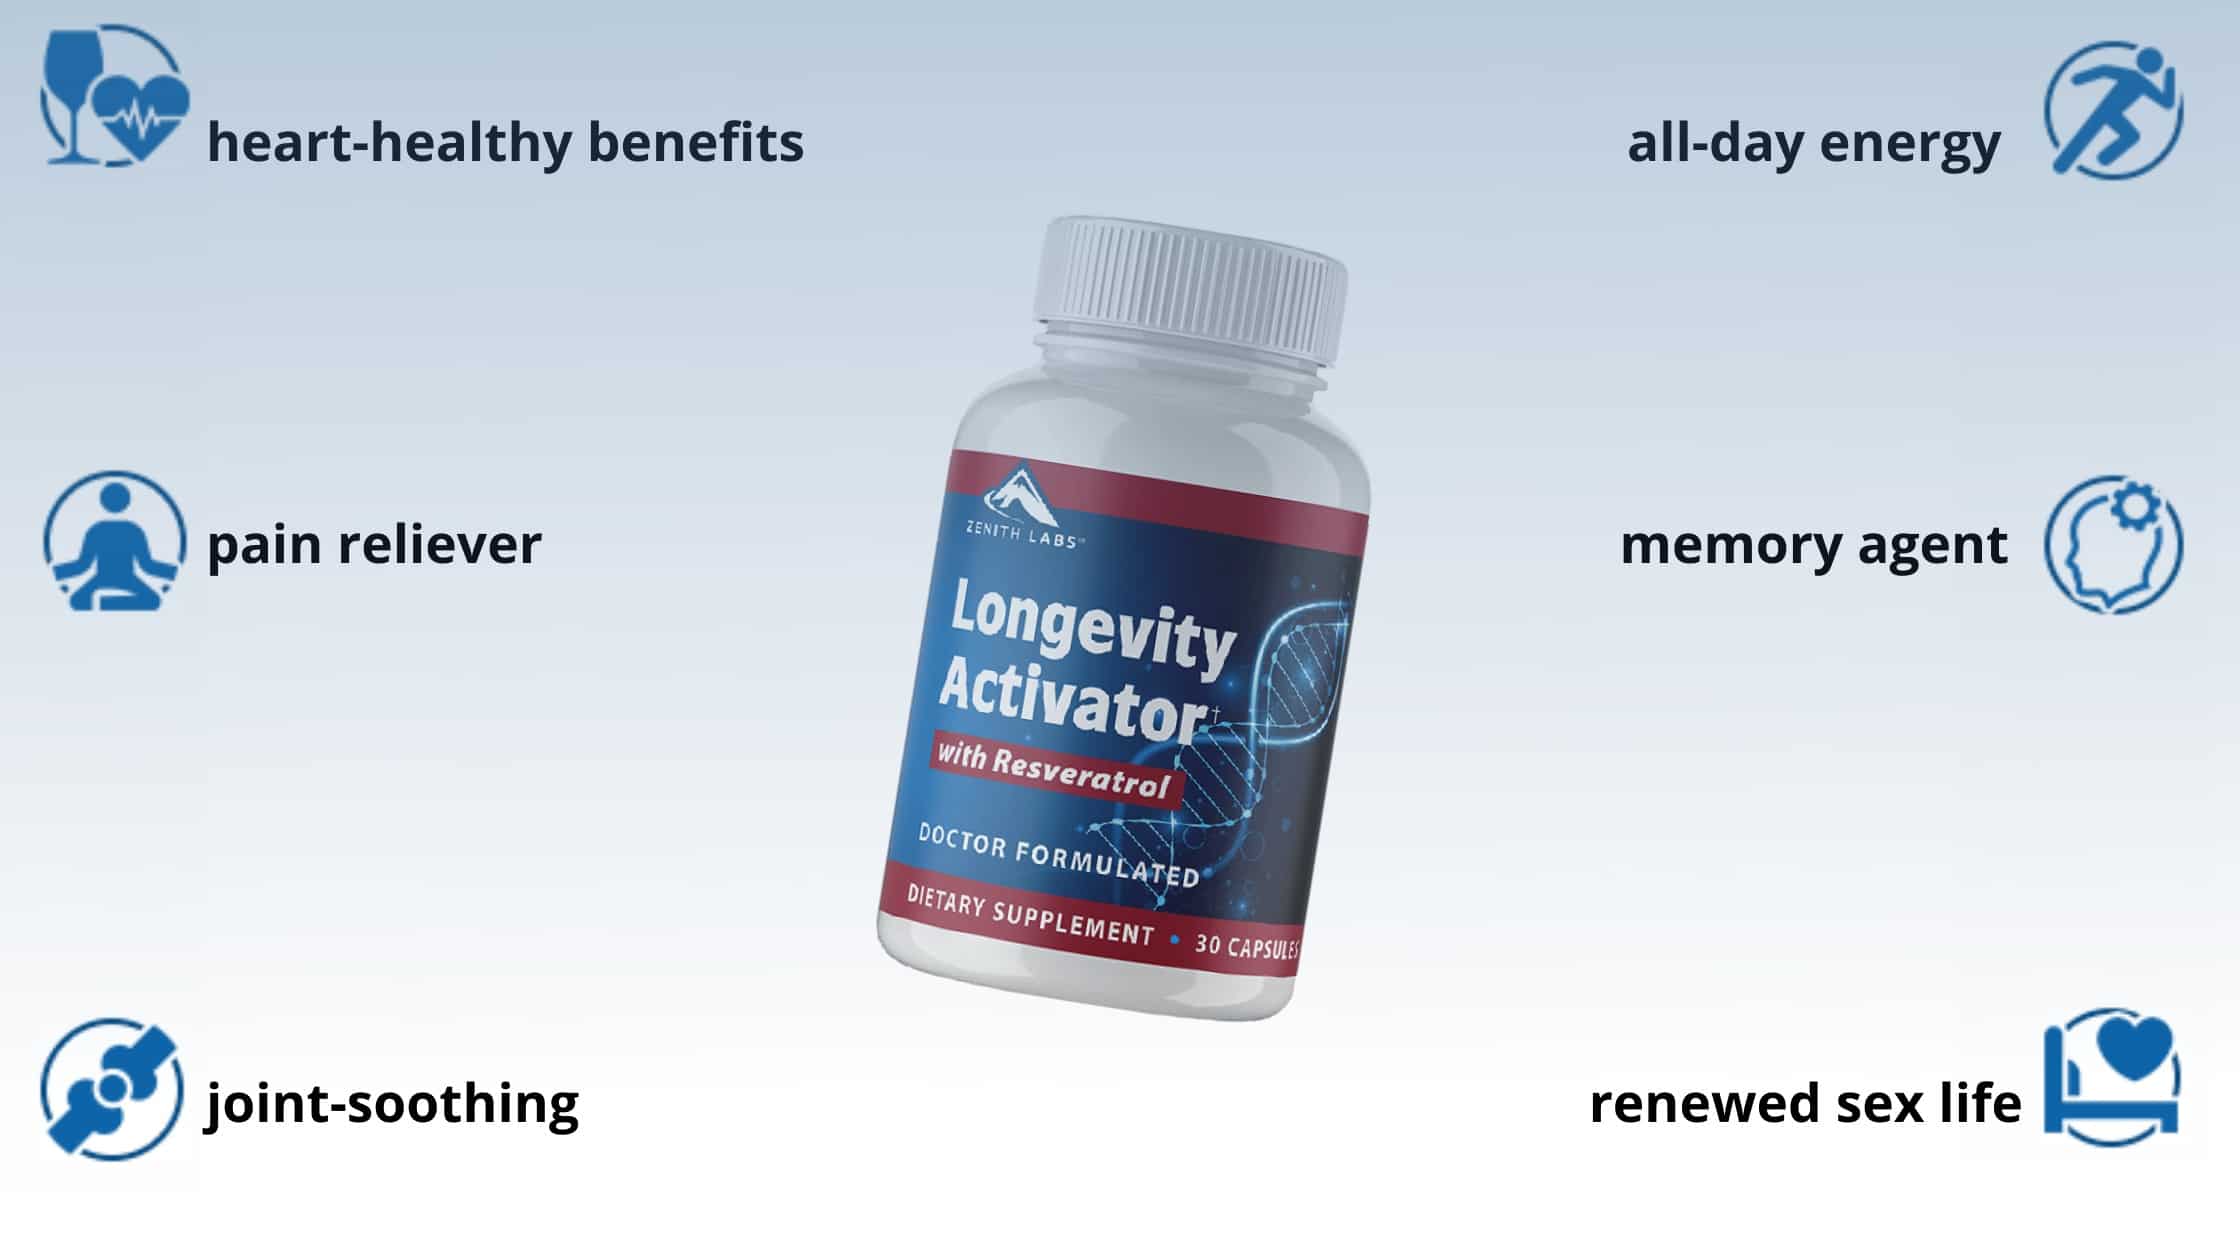  Longevity Activator benefits